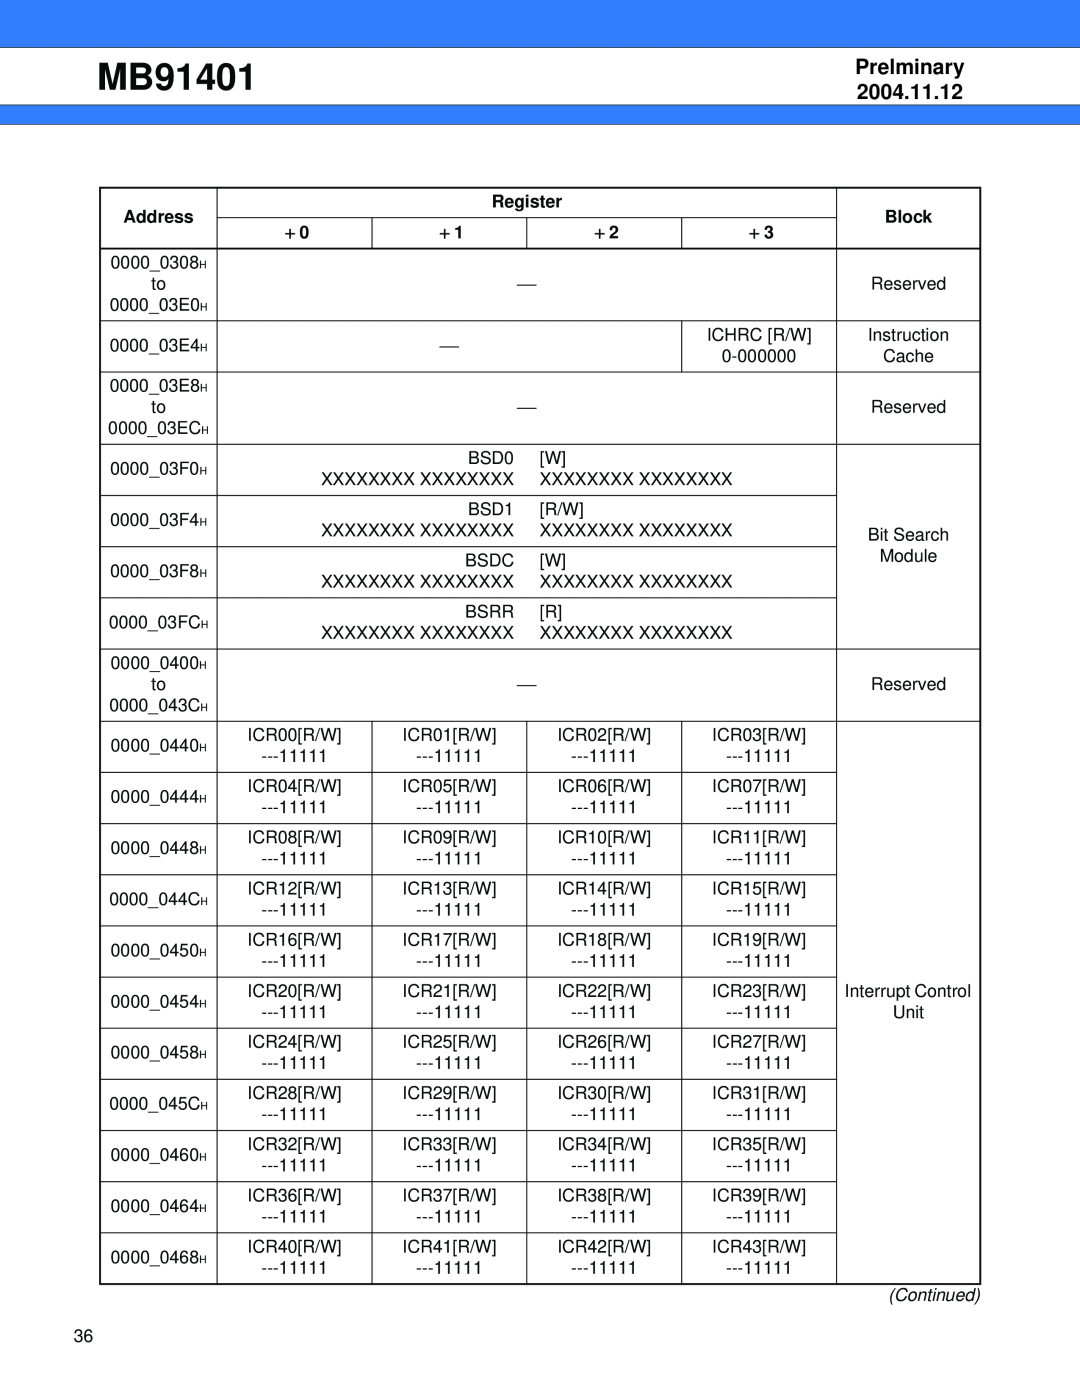 Fujitsu MB91401 manual Prelminary, 2004.11.12, Address, Register, Block 